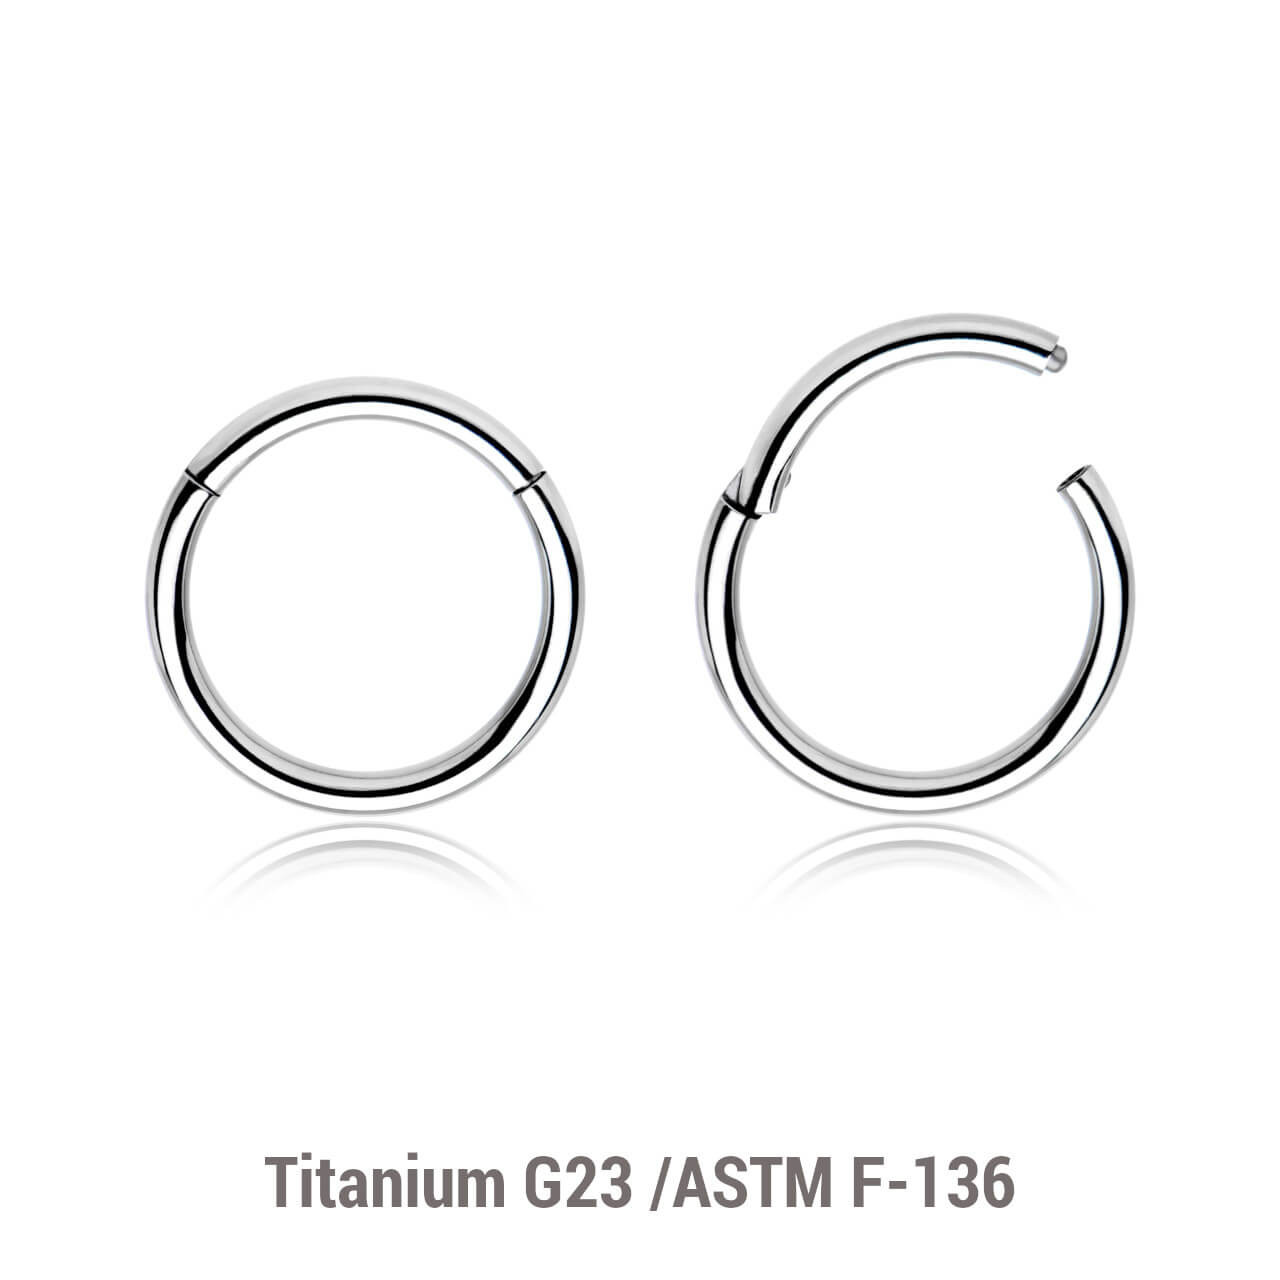 TSG16H Wholesale Lot of 10 Titanium G23 hinged segment rings, Thickness 1.6mm